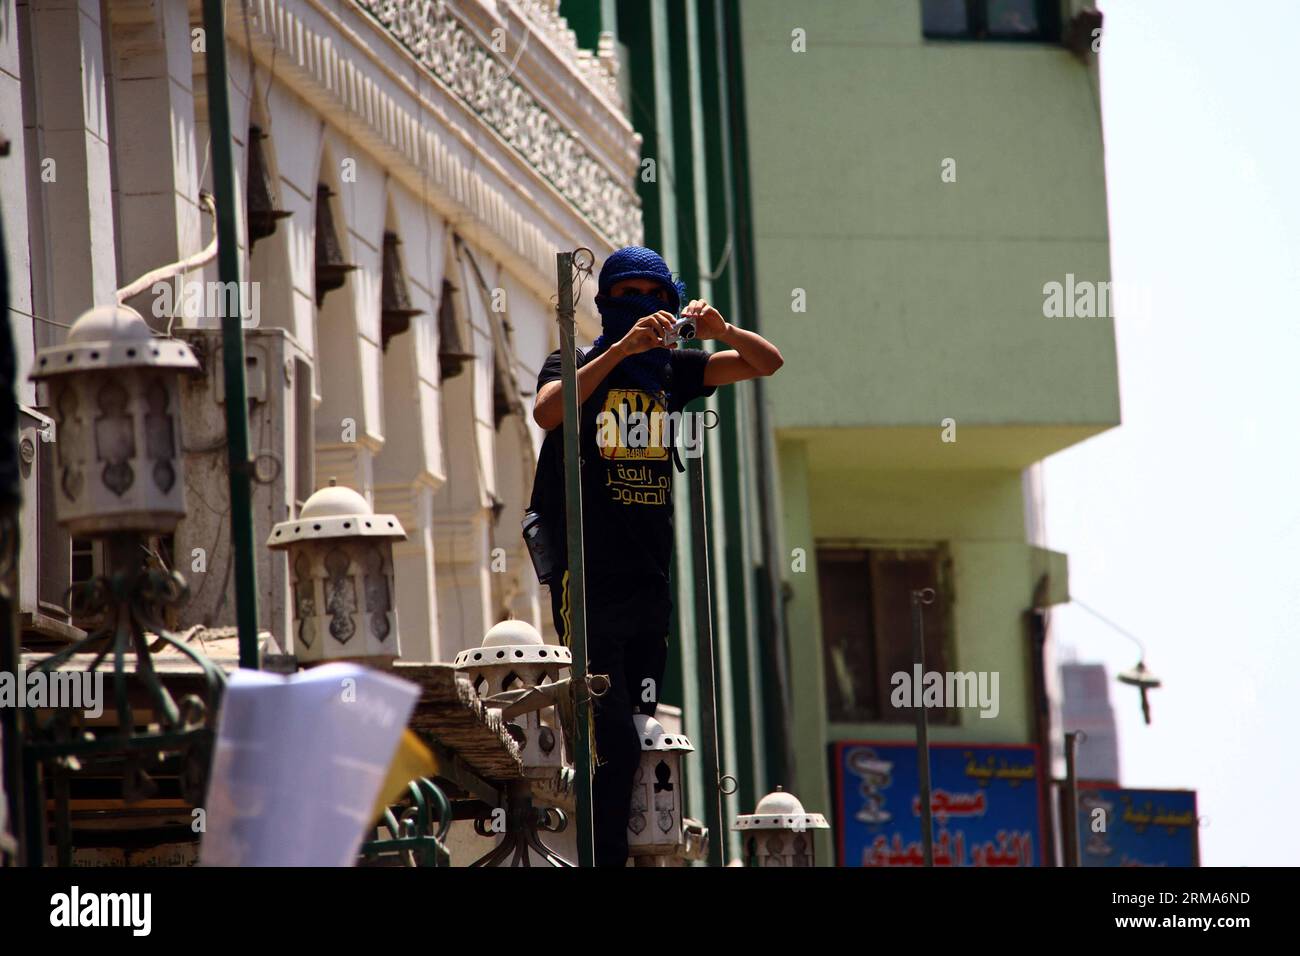 (140620) -- KAIRO, 20. Juni 2014 (Xinhua) -- Ein Unterstützer des gestürzten Präsidenten Mohamed Mursi nimmt an einer Demonstration in der Nachbarschaft El-Matareya Ost-Kairo, Ägypten, am 20. Juni 2014 Teil. (Xinhua/Ahmed Gomaa)(srb) ÄGYPTEN-KAIRO-PROTEST PUBLICATIONxNOTxINxCHN Kairo 20. Juni 2014 XINHUA ein Unterstützer des vertriebenen Präsidenten Mohamed Mursi nimmt an einer Demonstration im Viertel El Matareya Ost-Kairo Ägypten 20. Juni 2014 XINHUA Ahmed GOMAA SRB Ägypten Kairo Protest PUICATIOxCHN Stockfoto